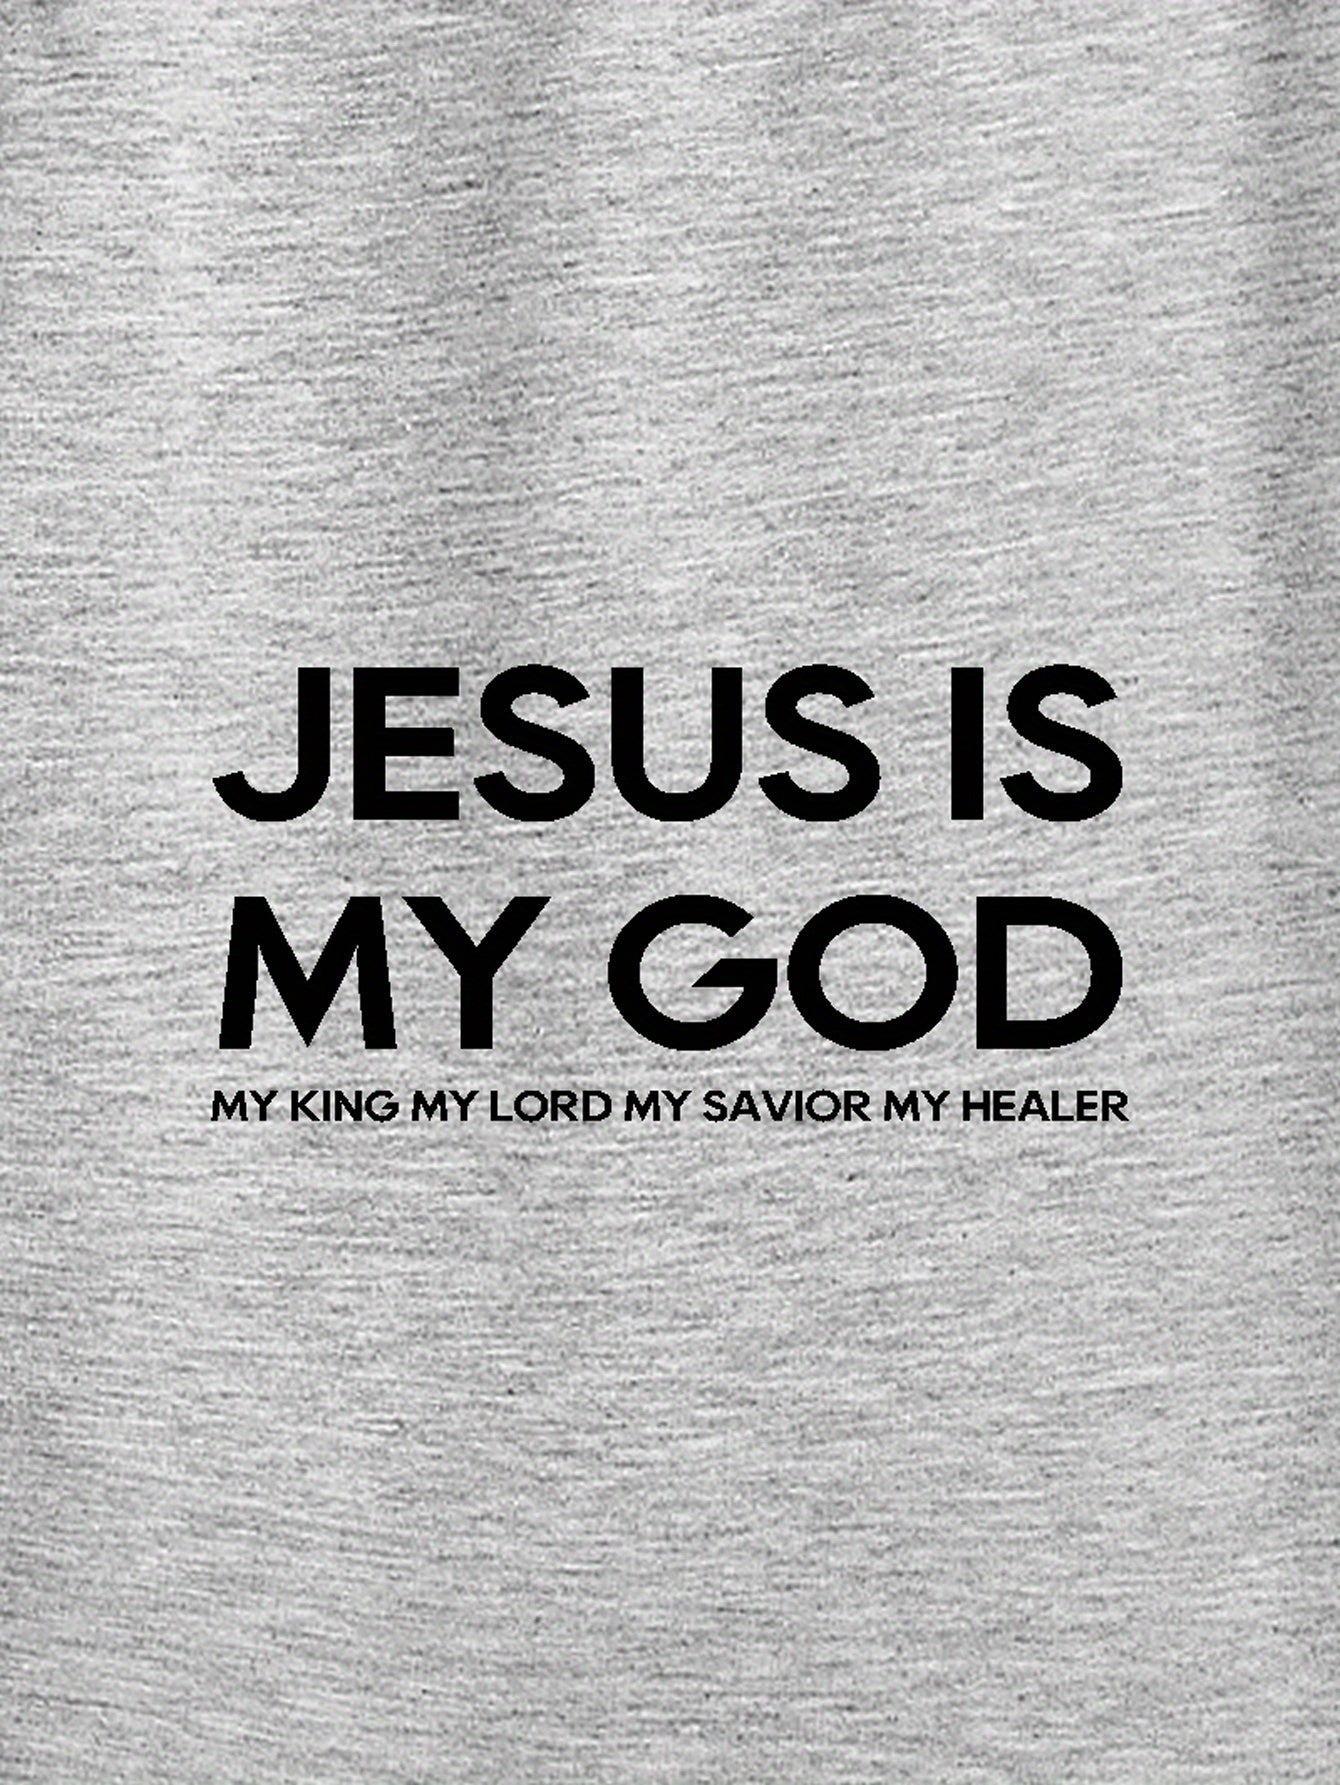 Jesus Is My God Men's Christian Shorts claimedbygoddesigns